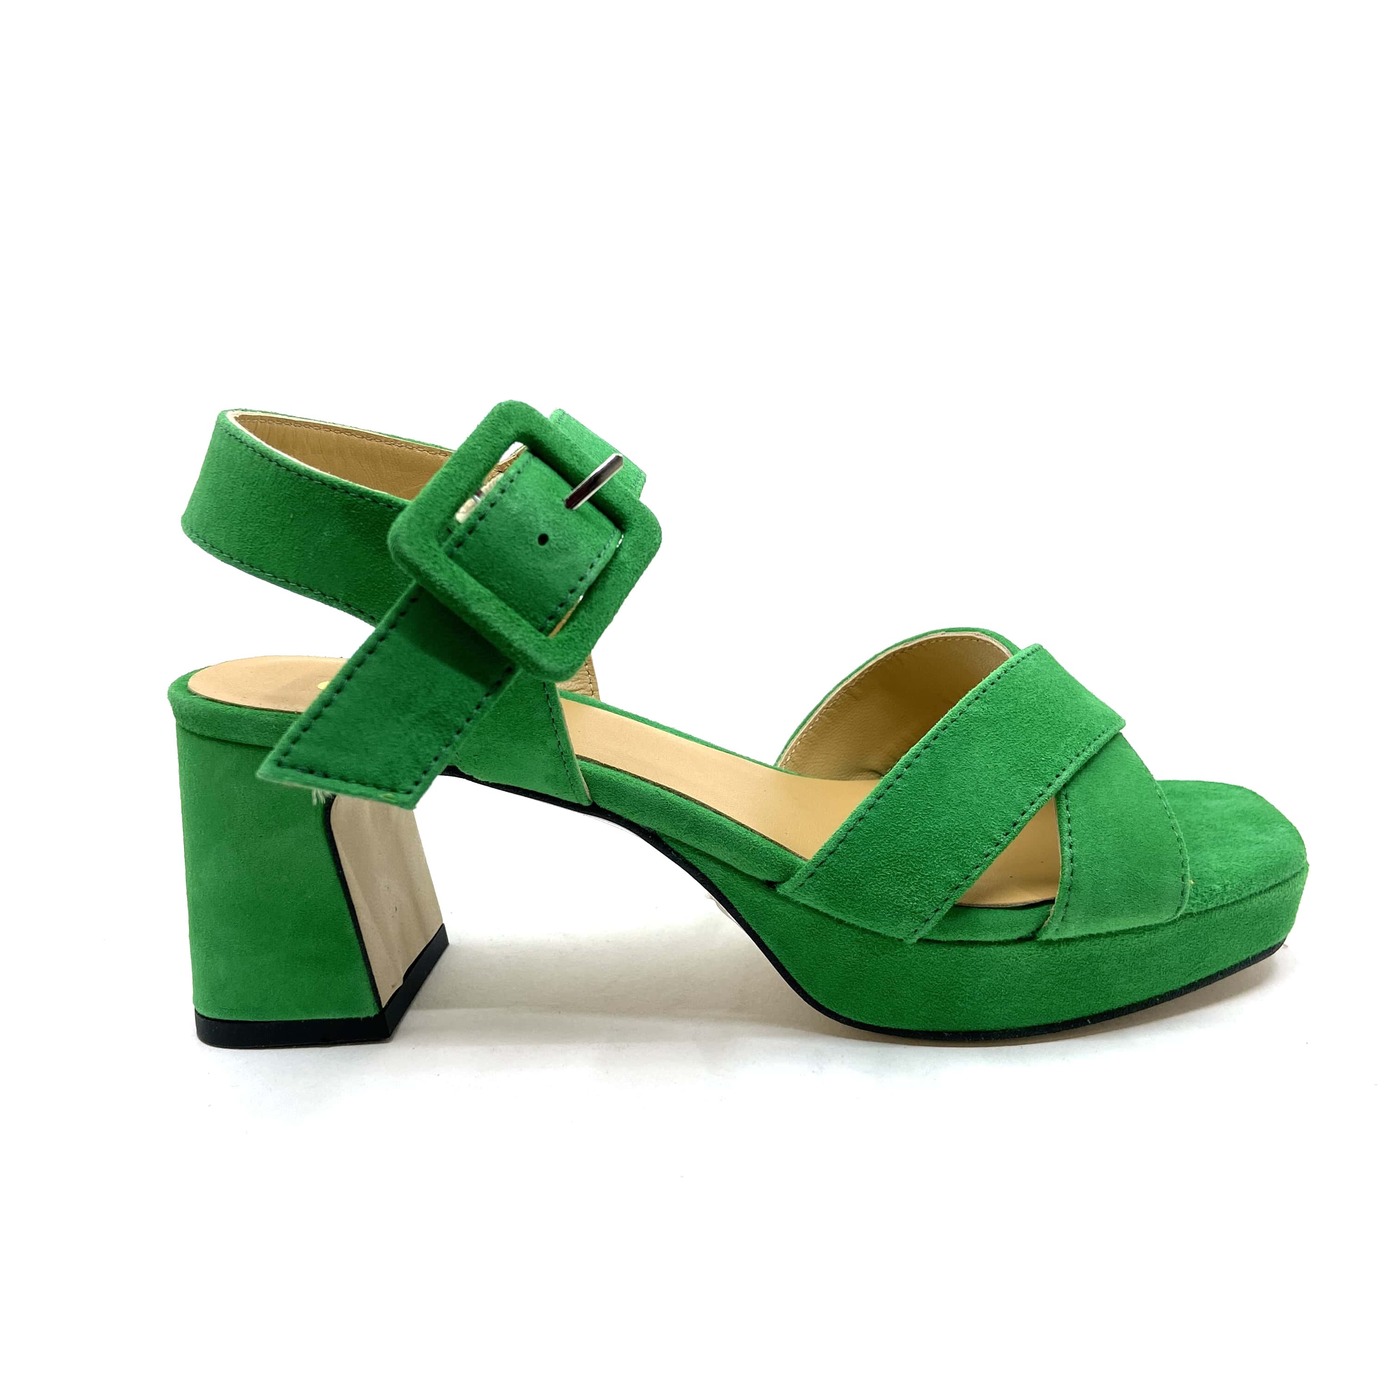 CTWLK sandaal groen